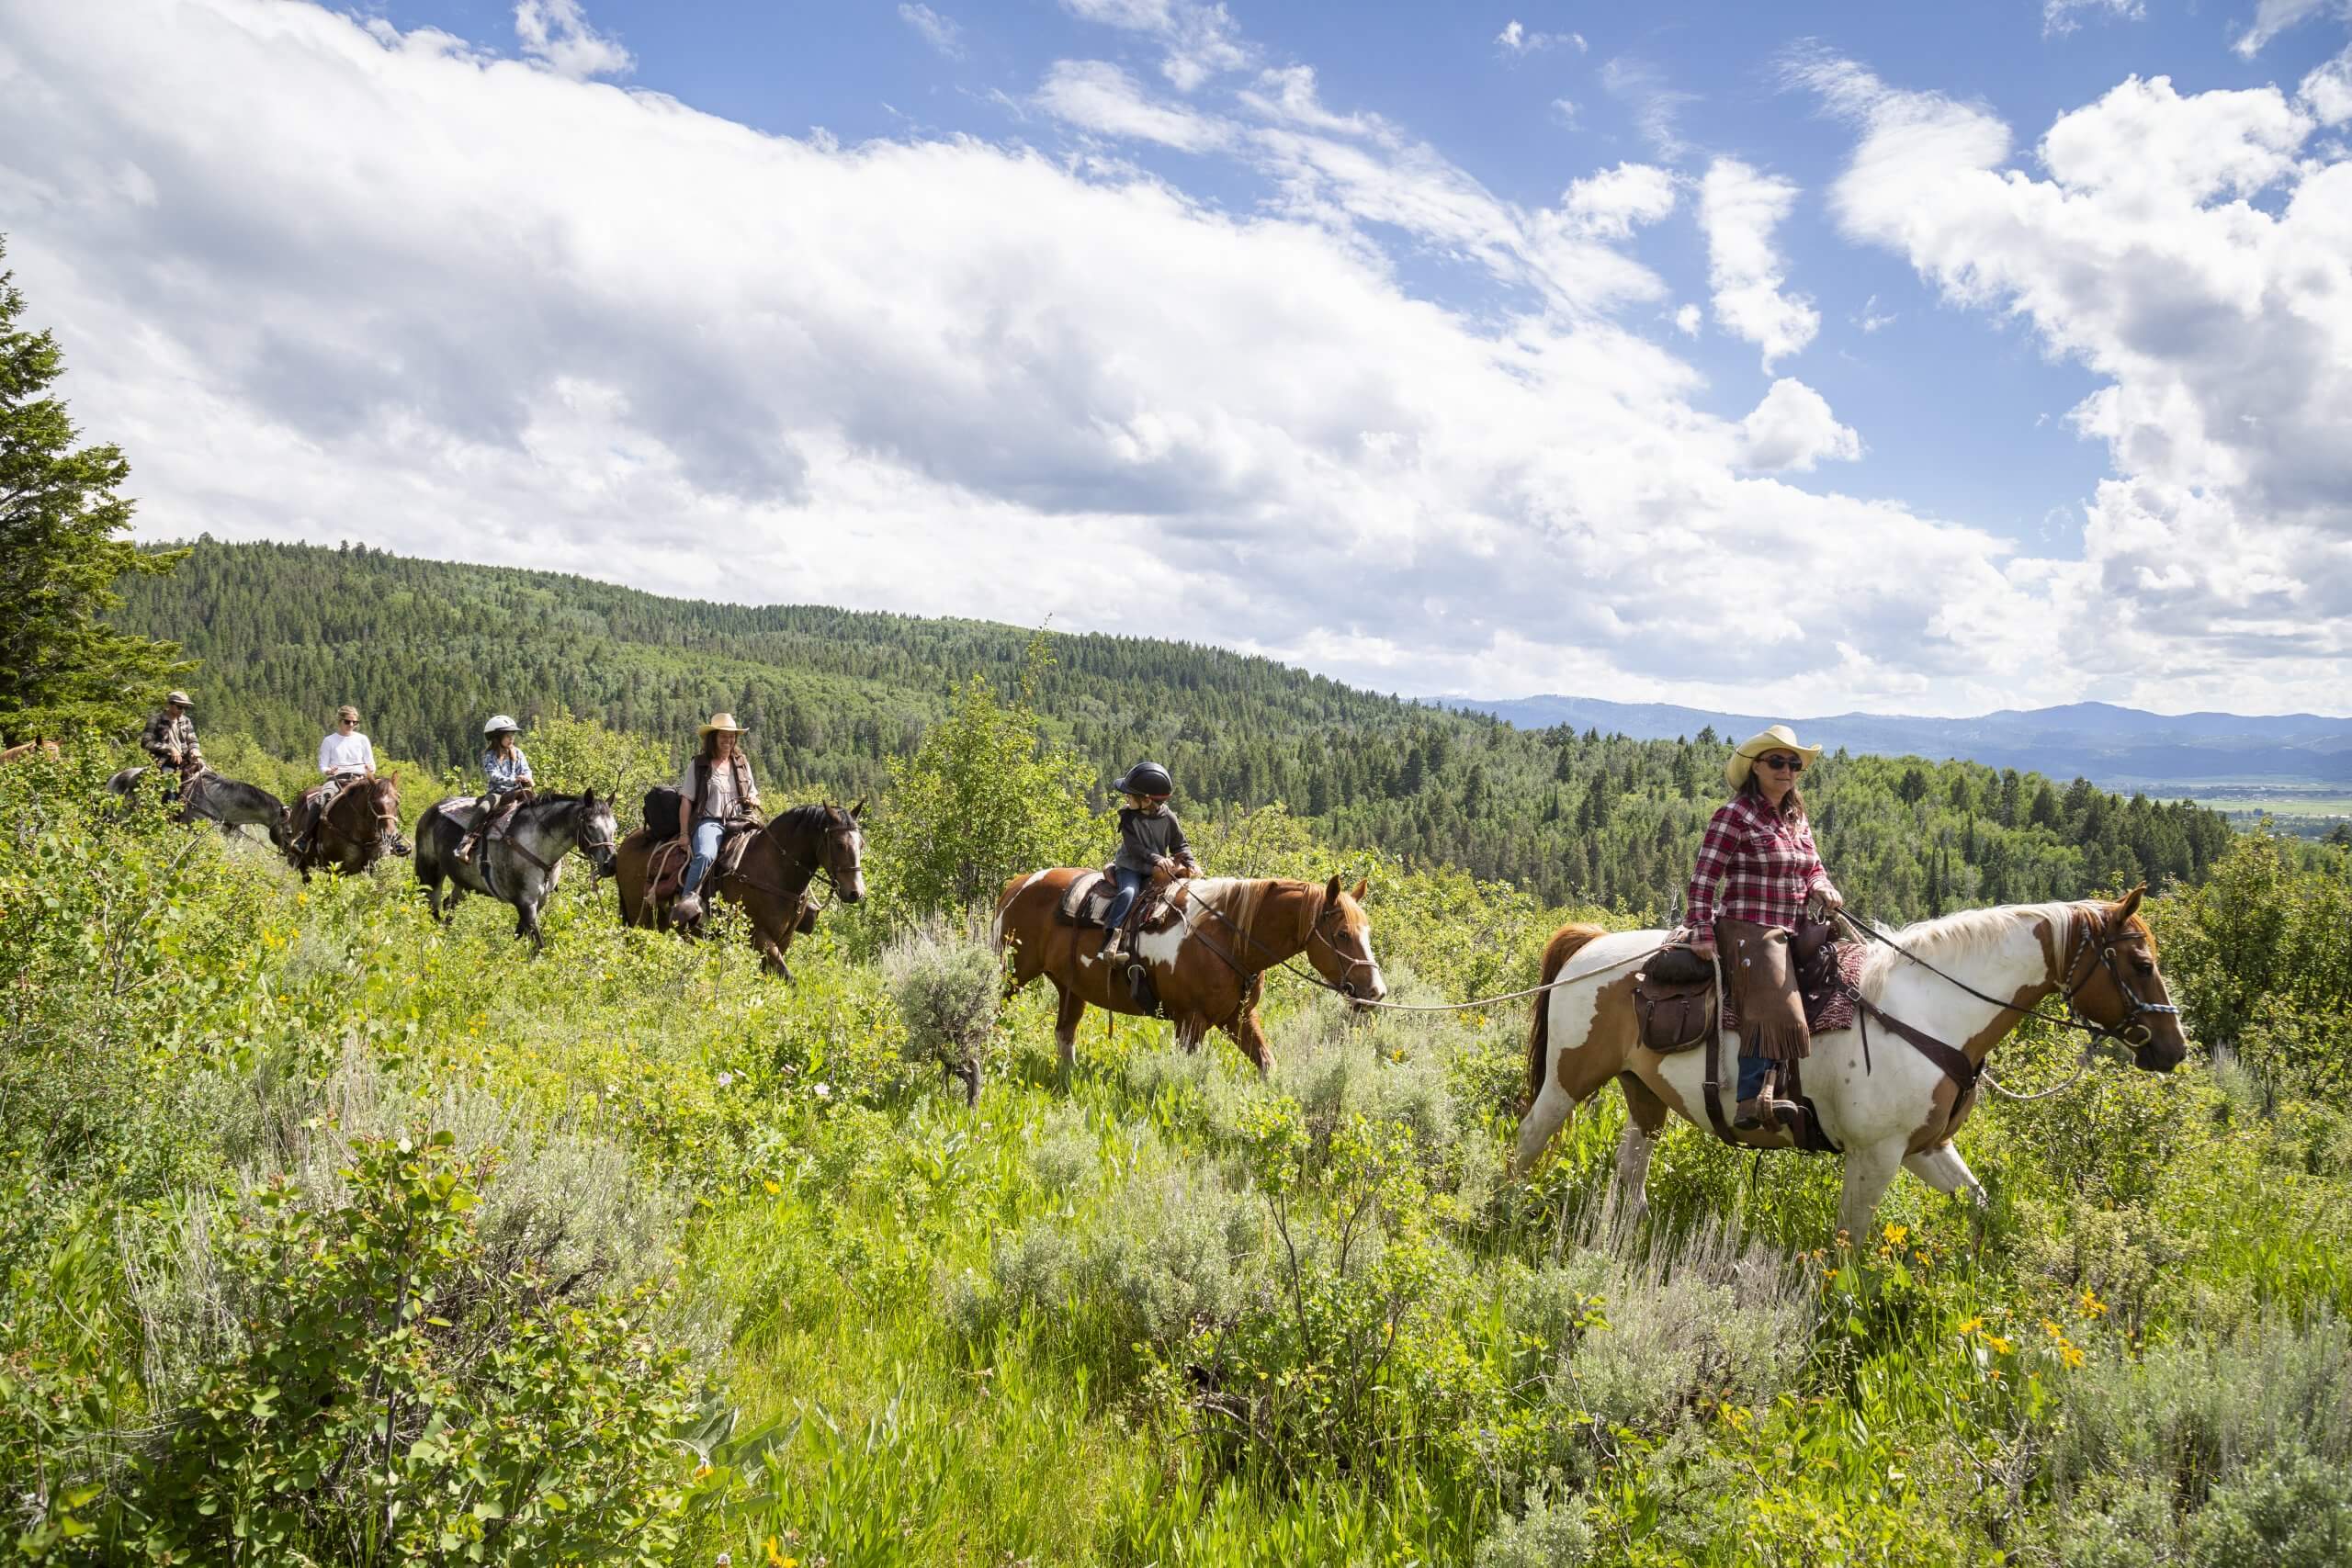 A family horseback riding in a green valley.